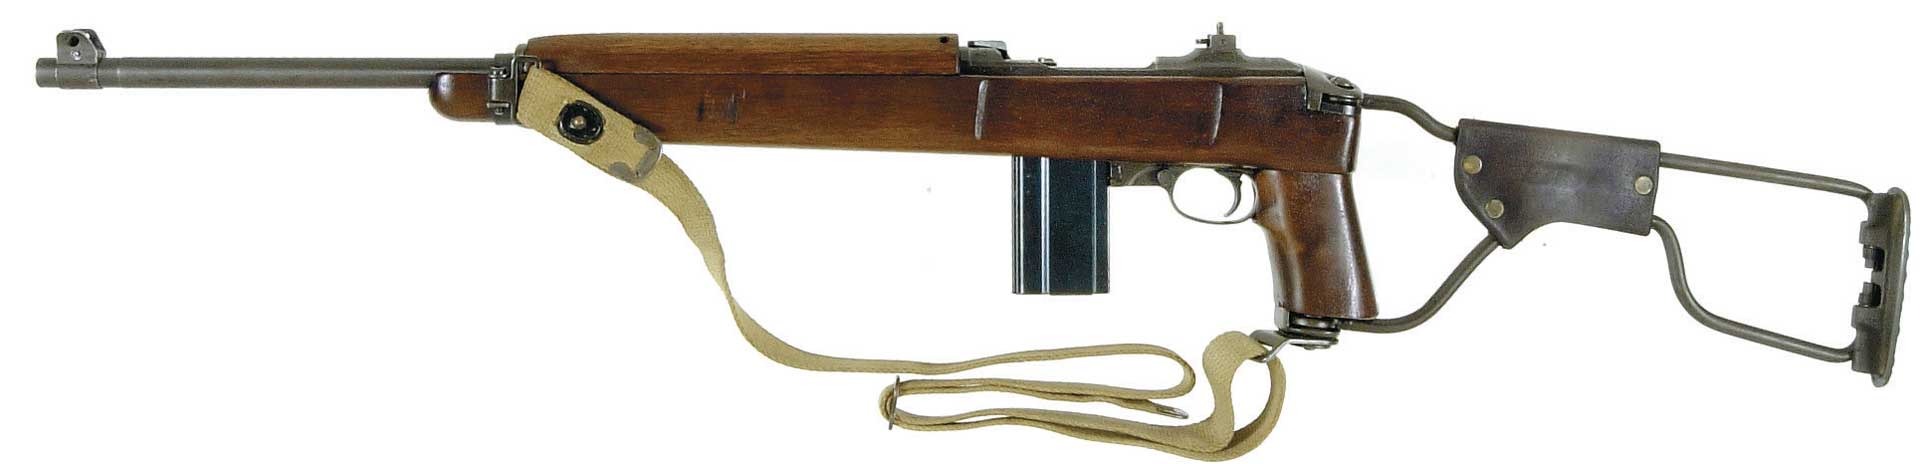 left side M1 carbine gun rifle wood metal sling